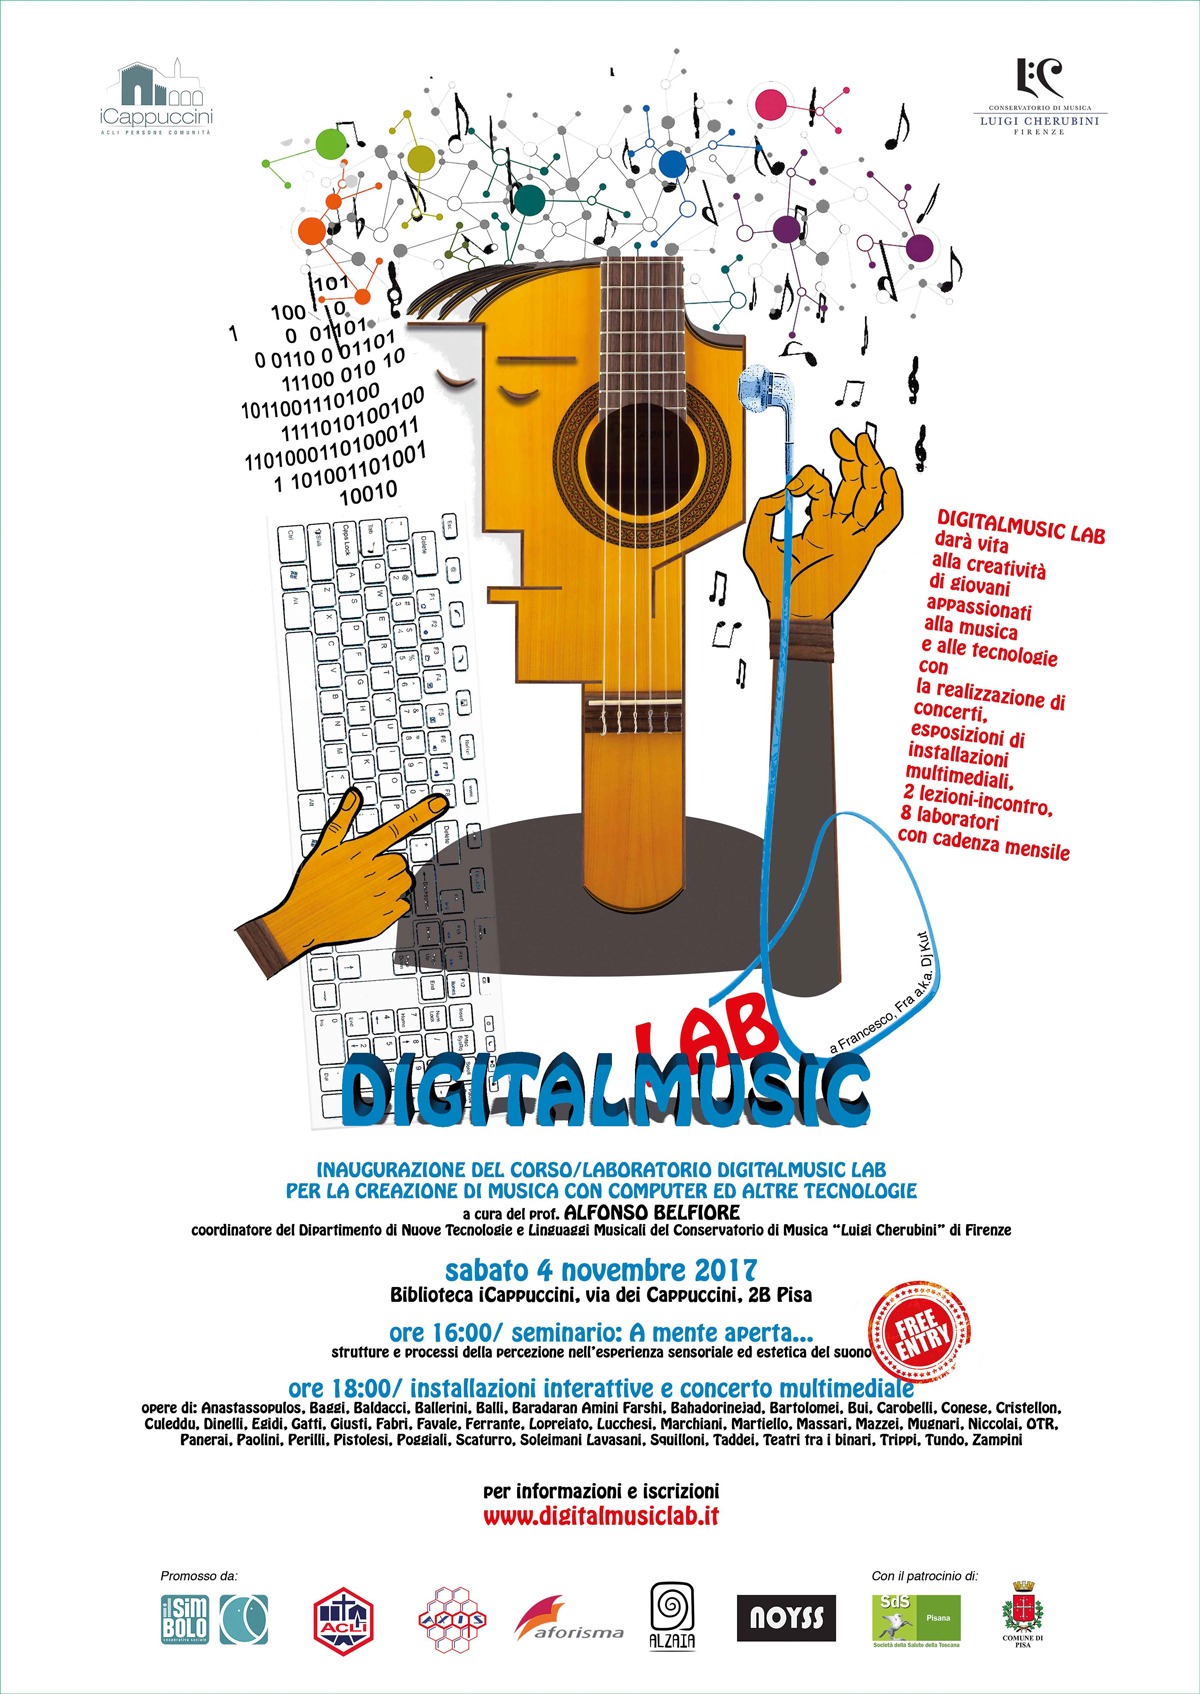 digitalmusic-lab-manifesto-for-web